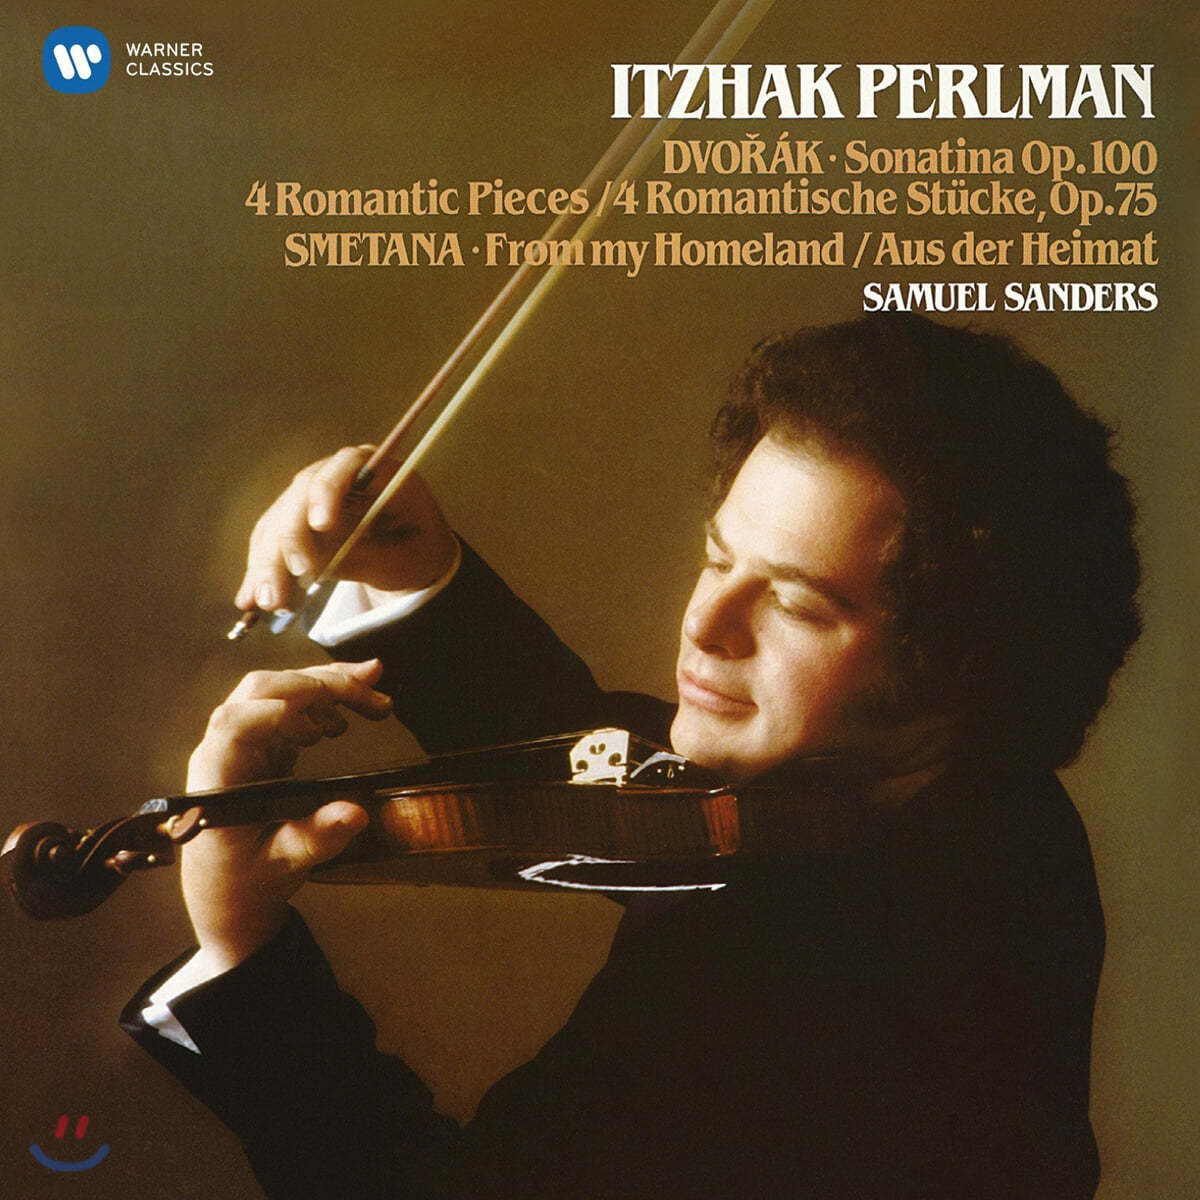 Itzhak Perlman 이차크 펄만 36집 - 드보르작: 소나티나, 로맨틱 소품 / 스메타나: 나의 조국으로부터 (1985) (Dvorak: Sonatina, Romantic Pieces Op.75 / Smetana: From My Homeland)